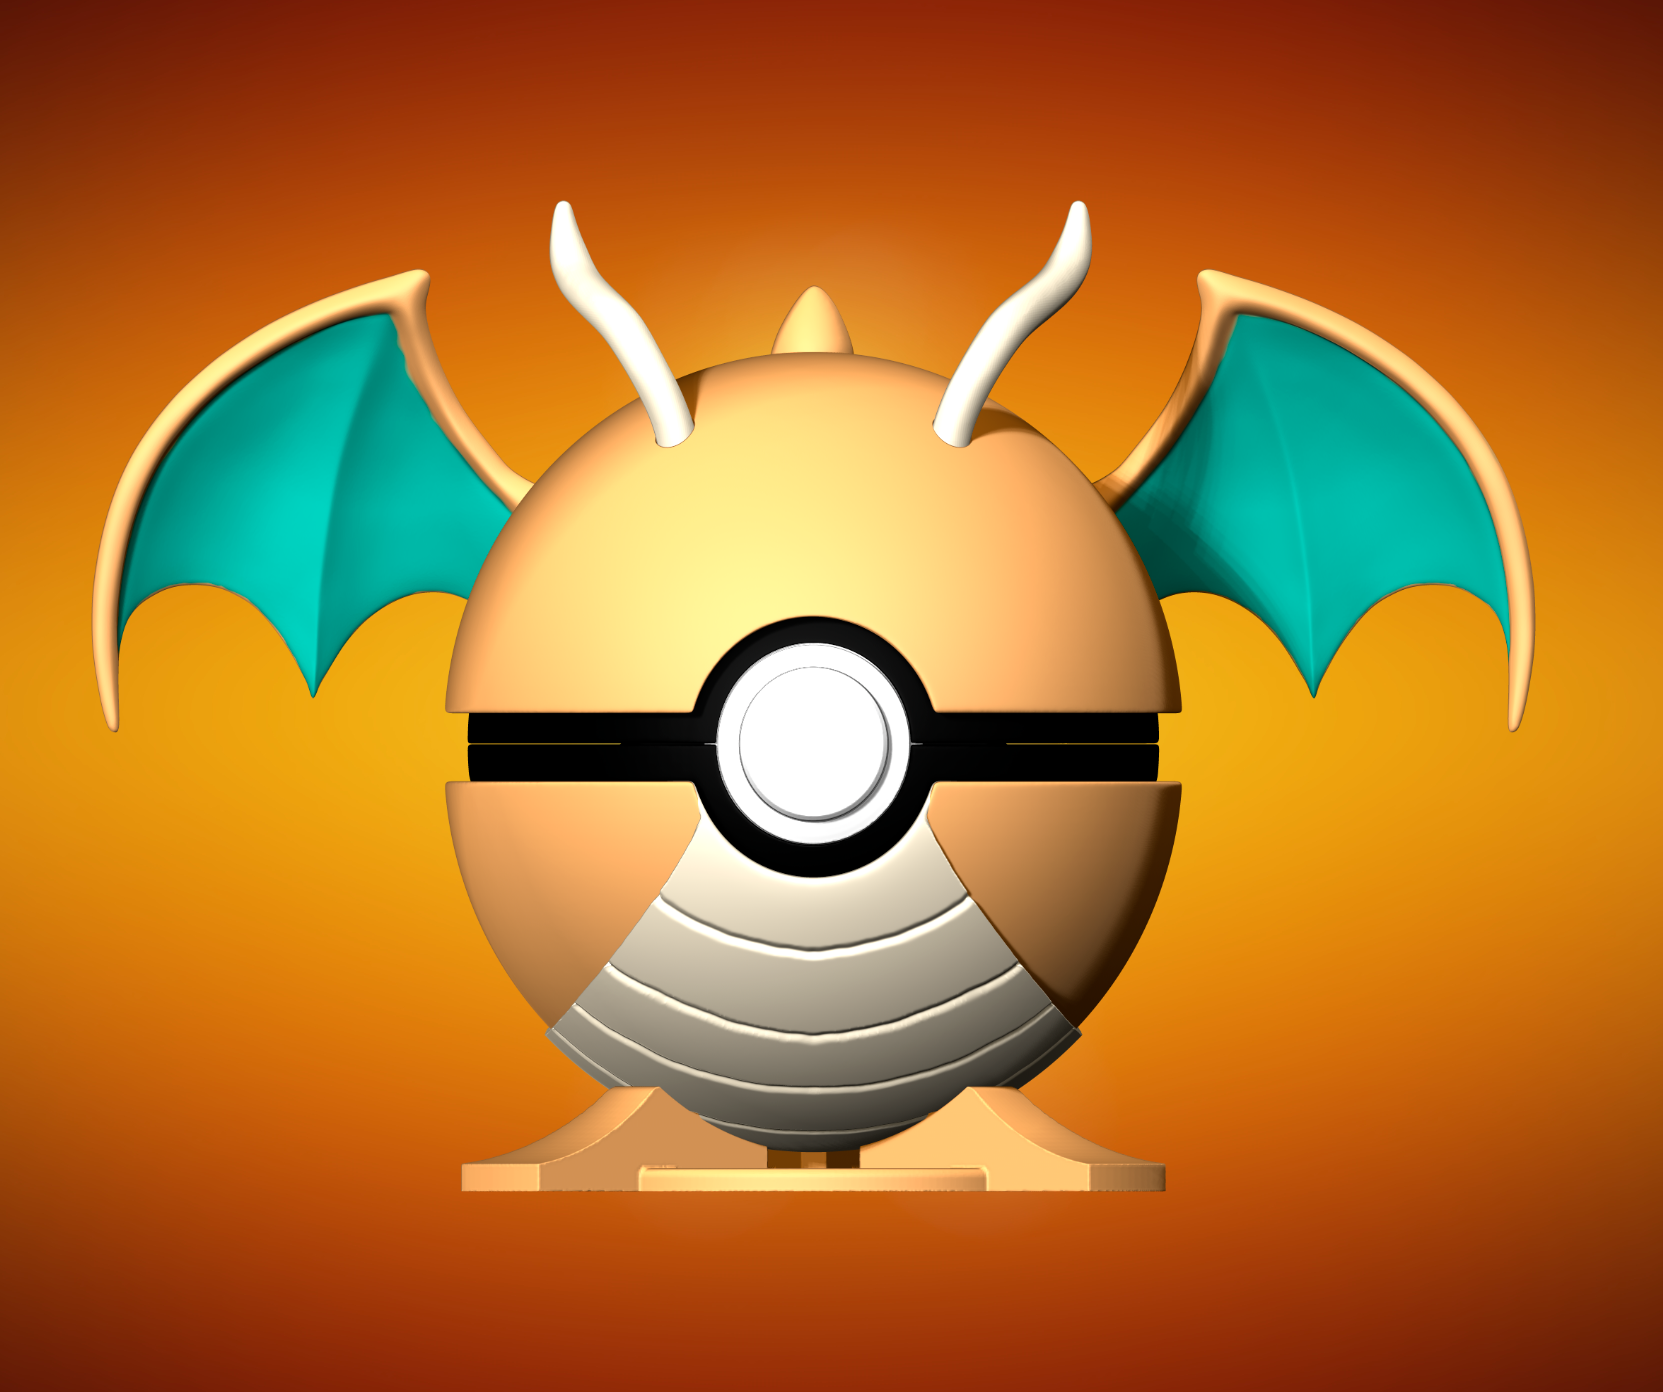 Pokeball Dragonite Functional Pokemon @ Pinshape